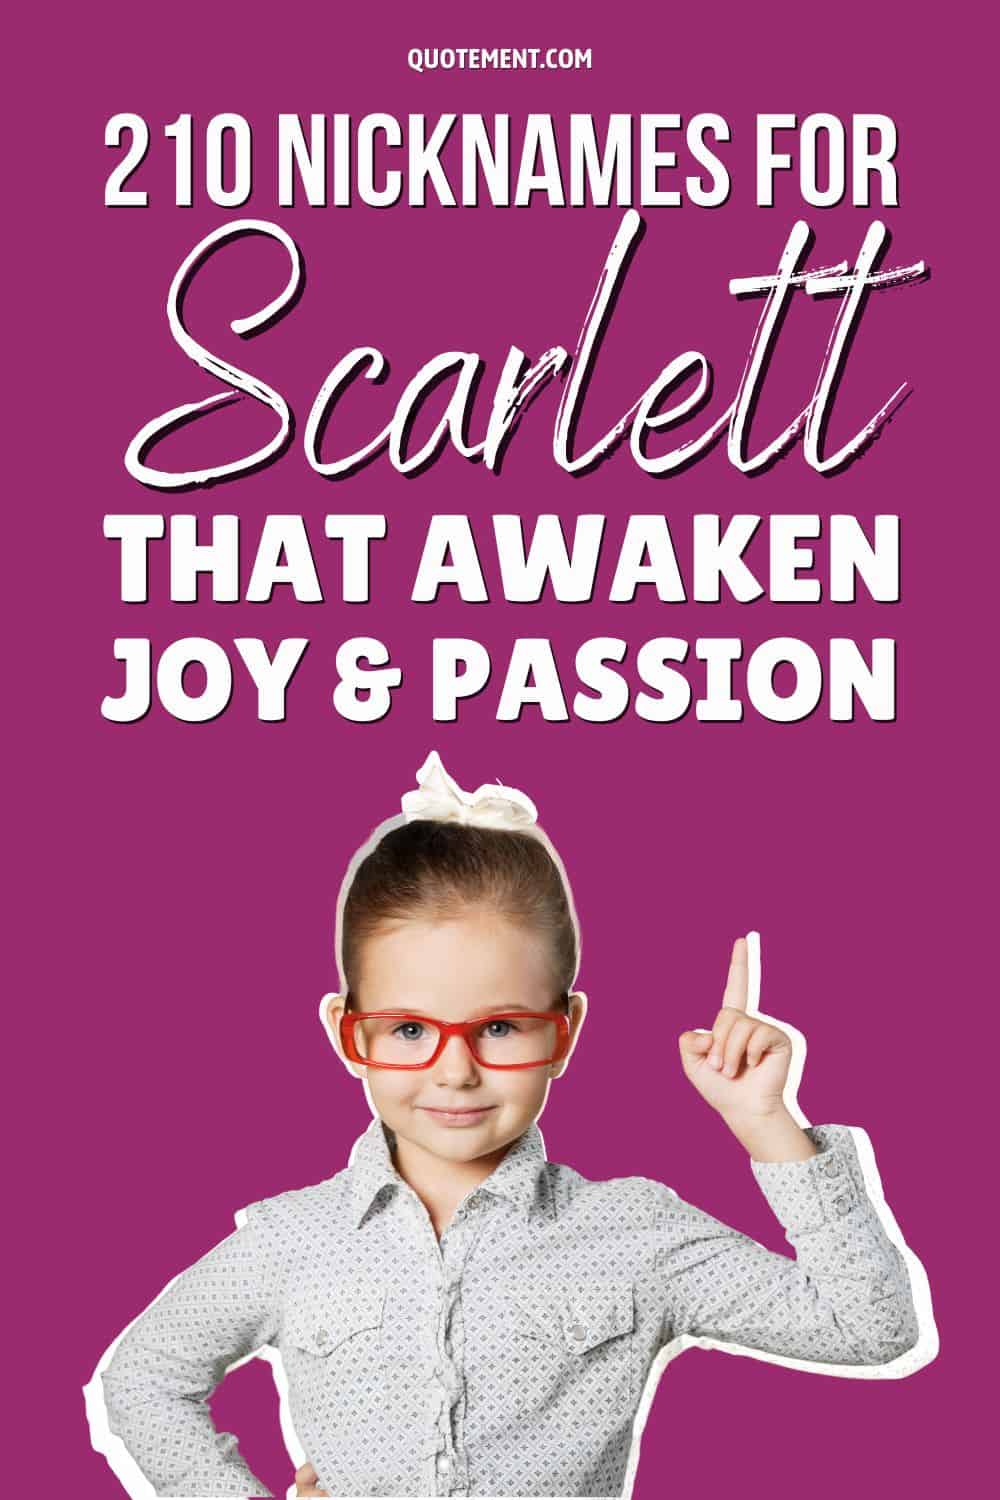 210 Nicknames For Scarlett That Awaken Joy And Passion
